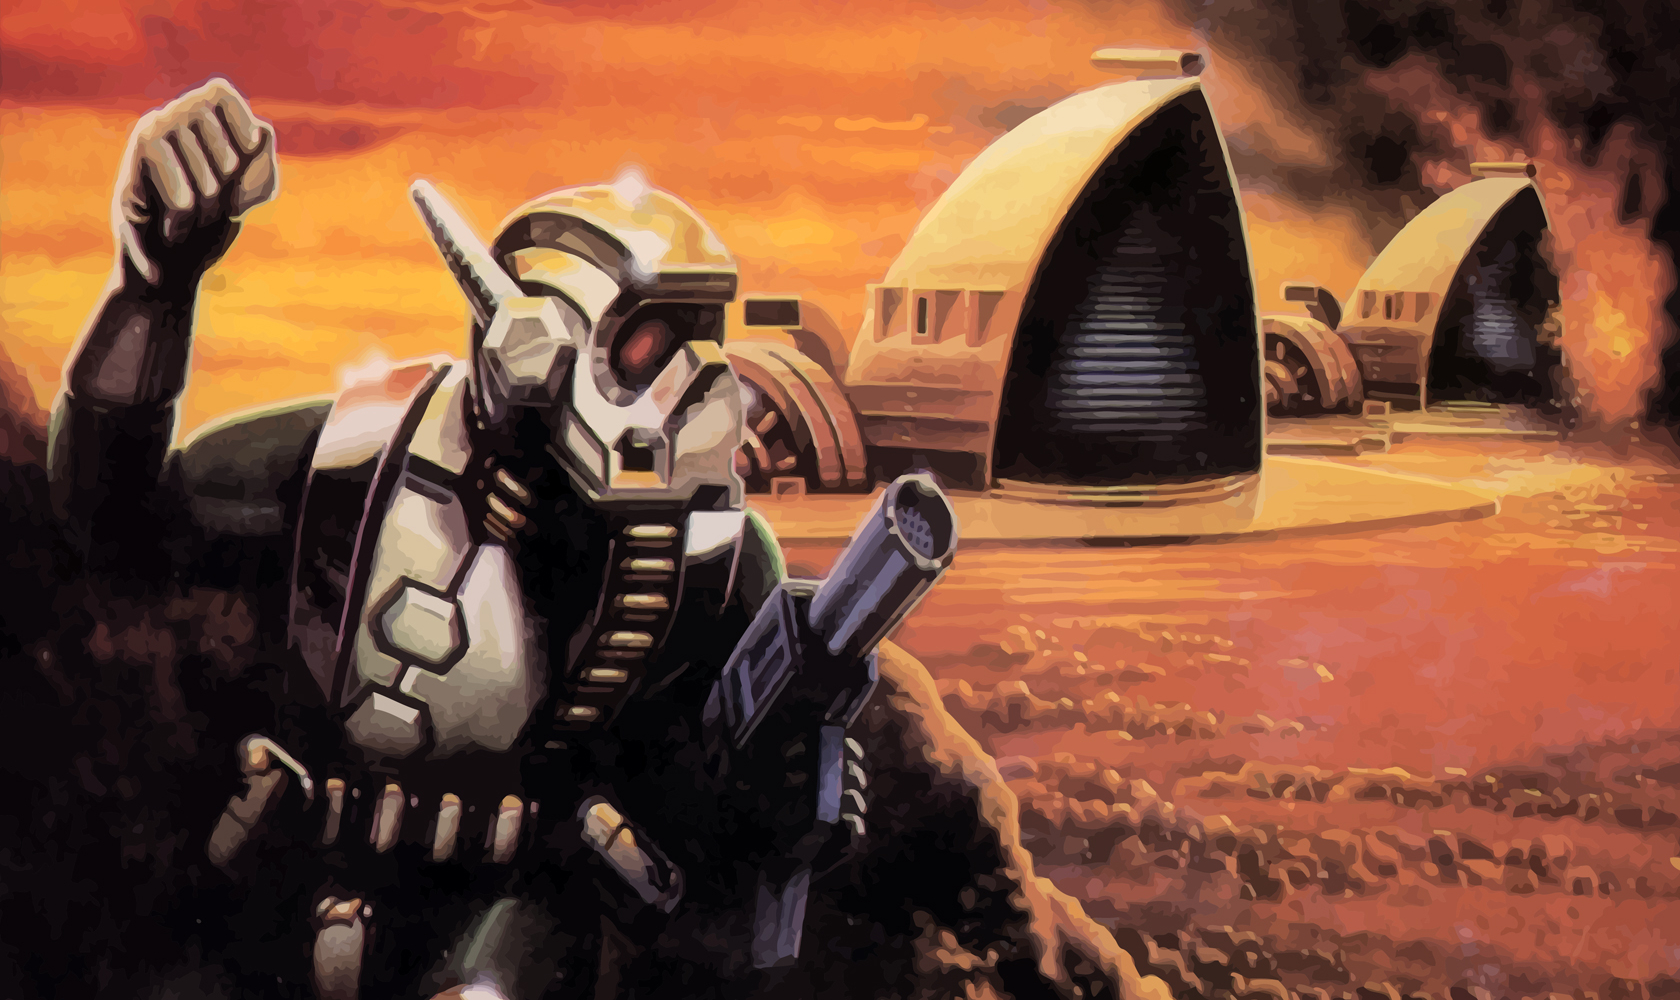 Dune II: Battle for Arrakis